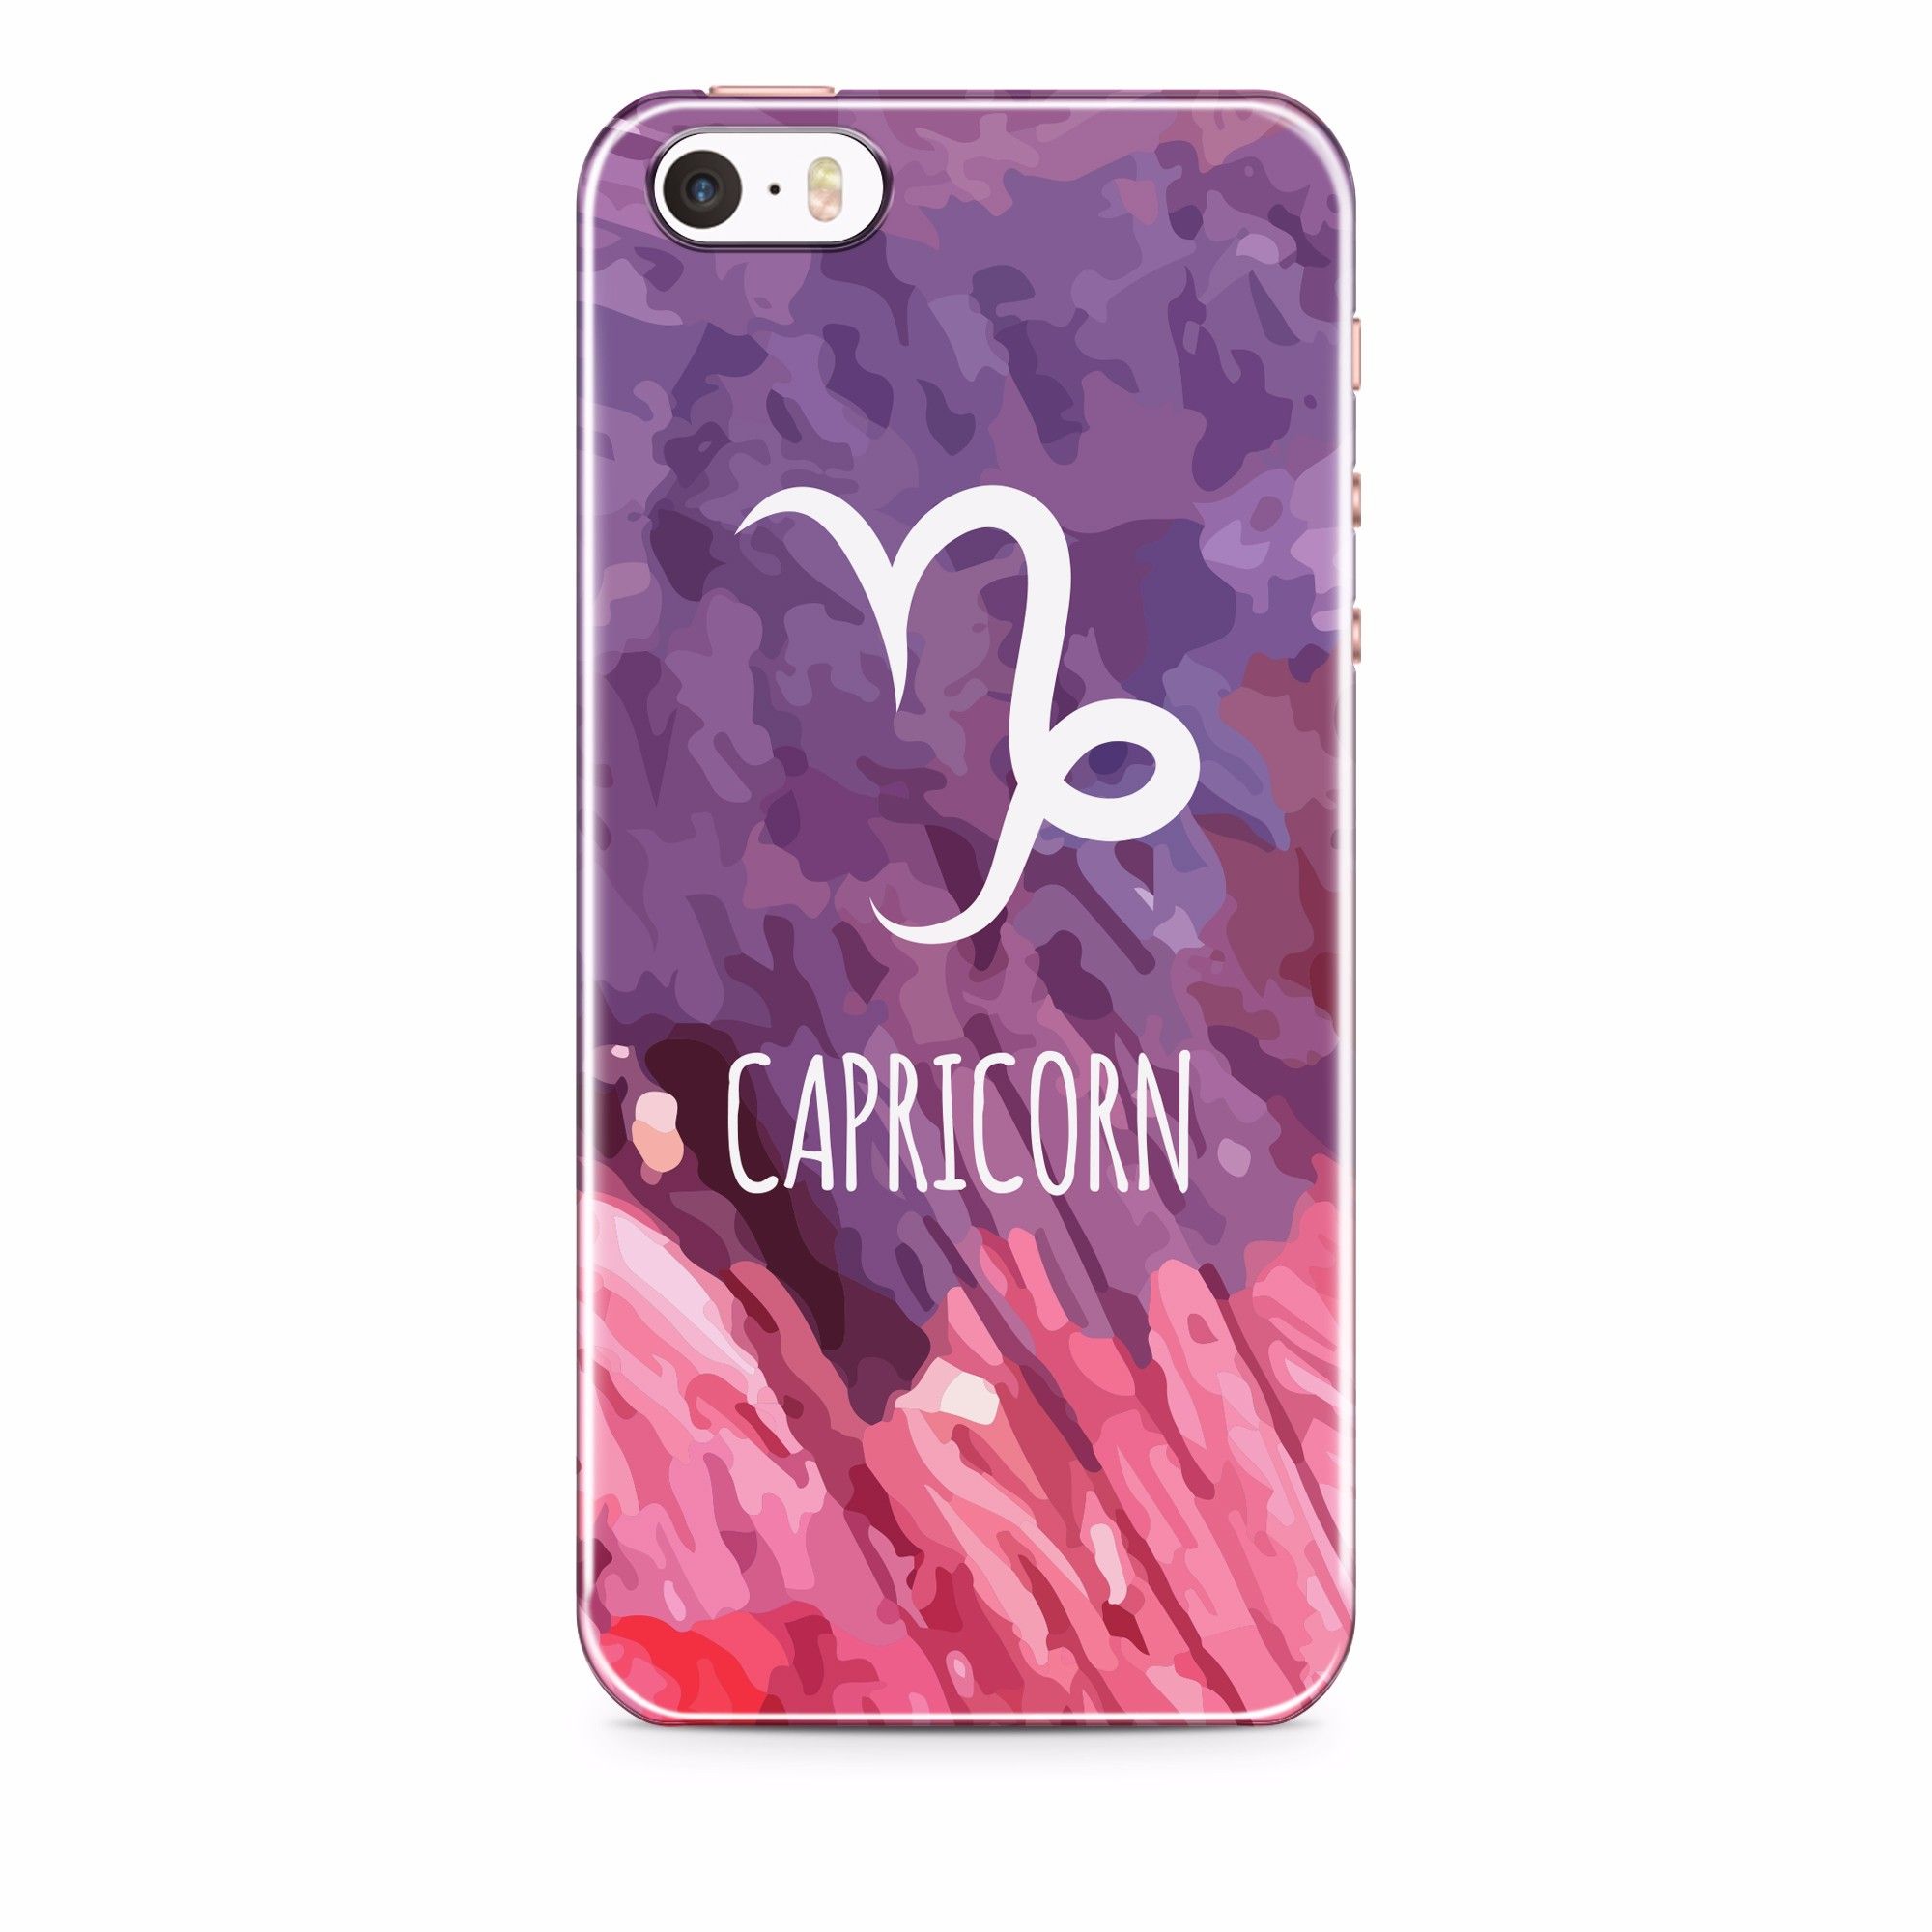  Capricorn - Iphone 5,5s,SE 